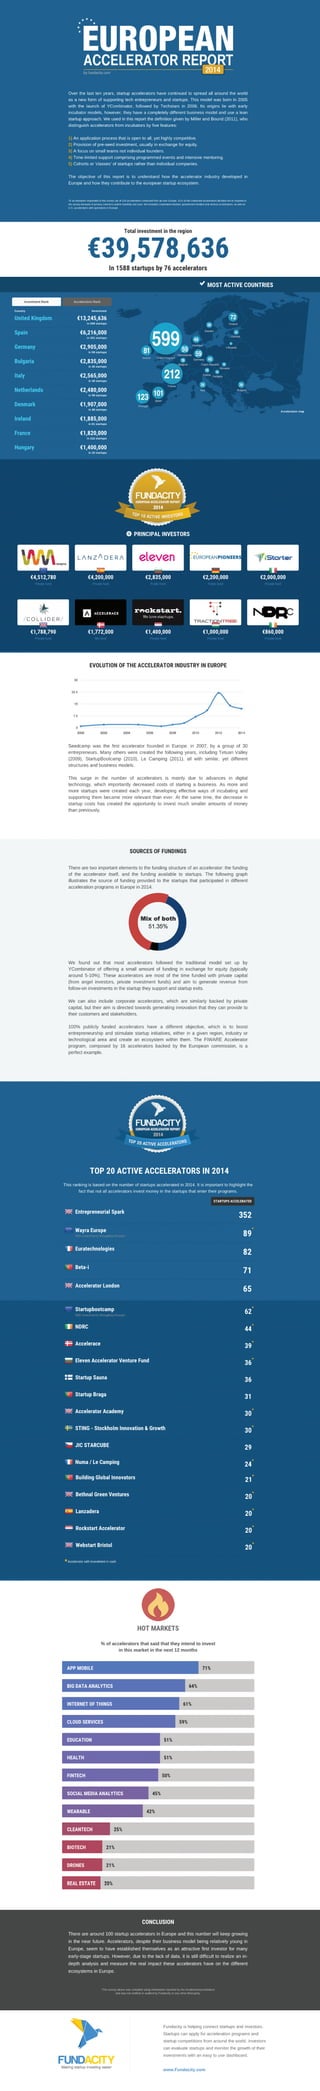 European accelerator report 2014